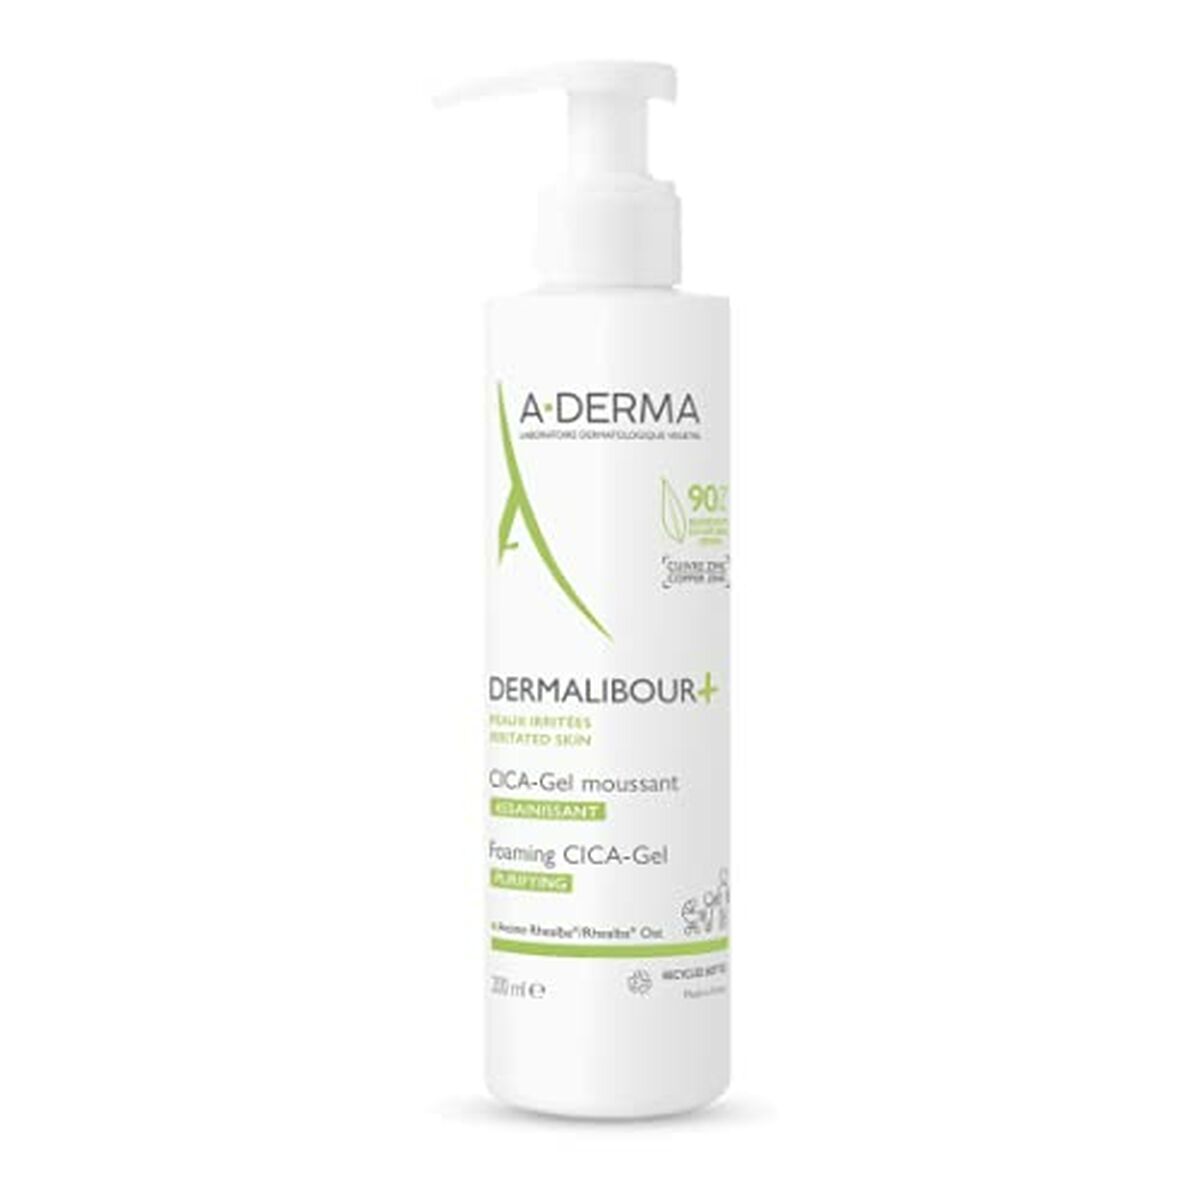 Osta tuote Cleansing Gel A-Derma Dermalibour+ Cica Puhdistava verkkokaupastamme Korhone: Parfyymit & Kosmetiikka 10% alennuksella koodilla KORHONE